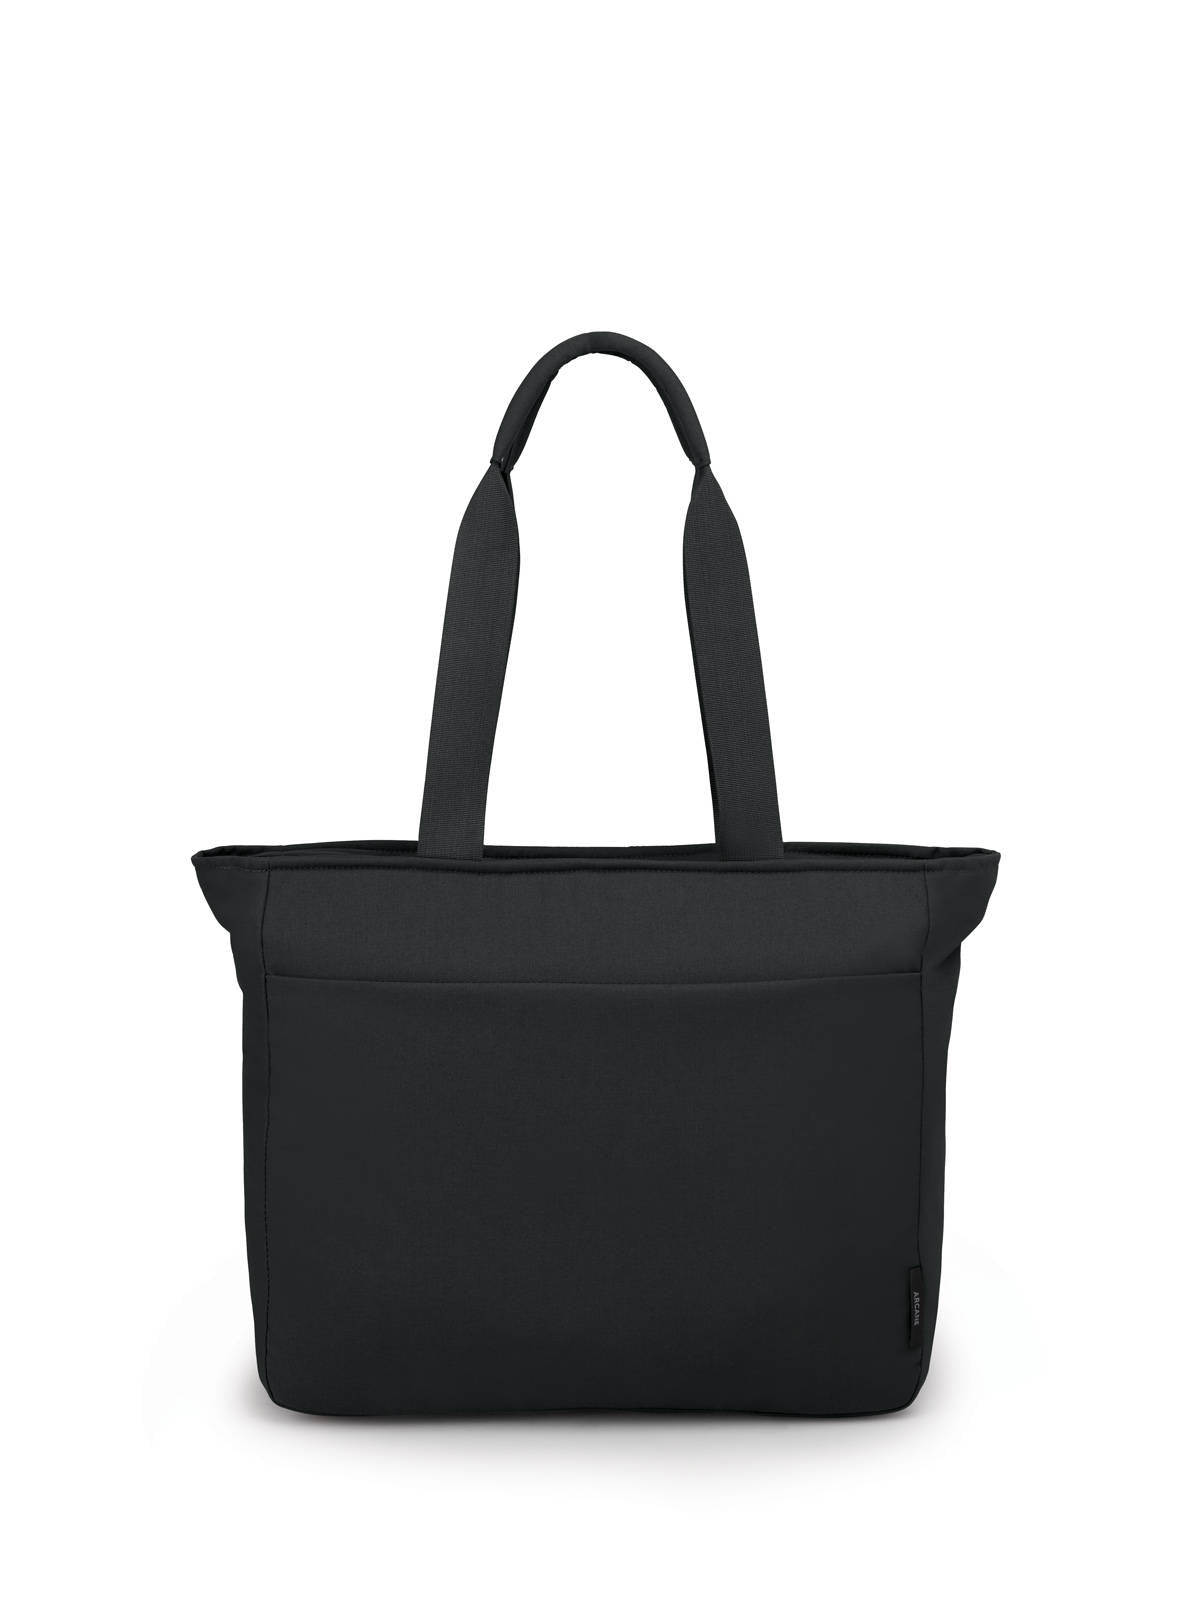 Arcane Tote Bag handlebag